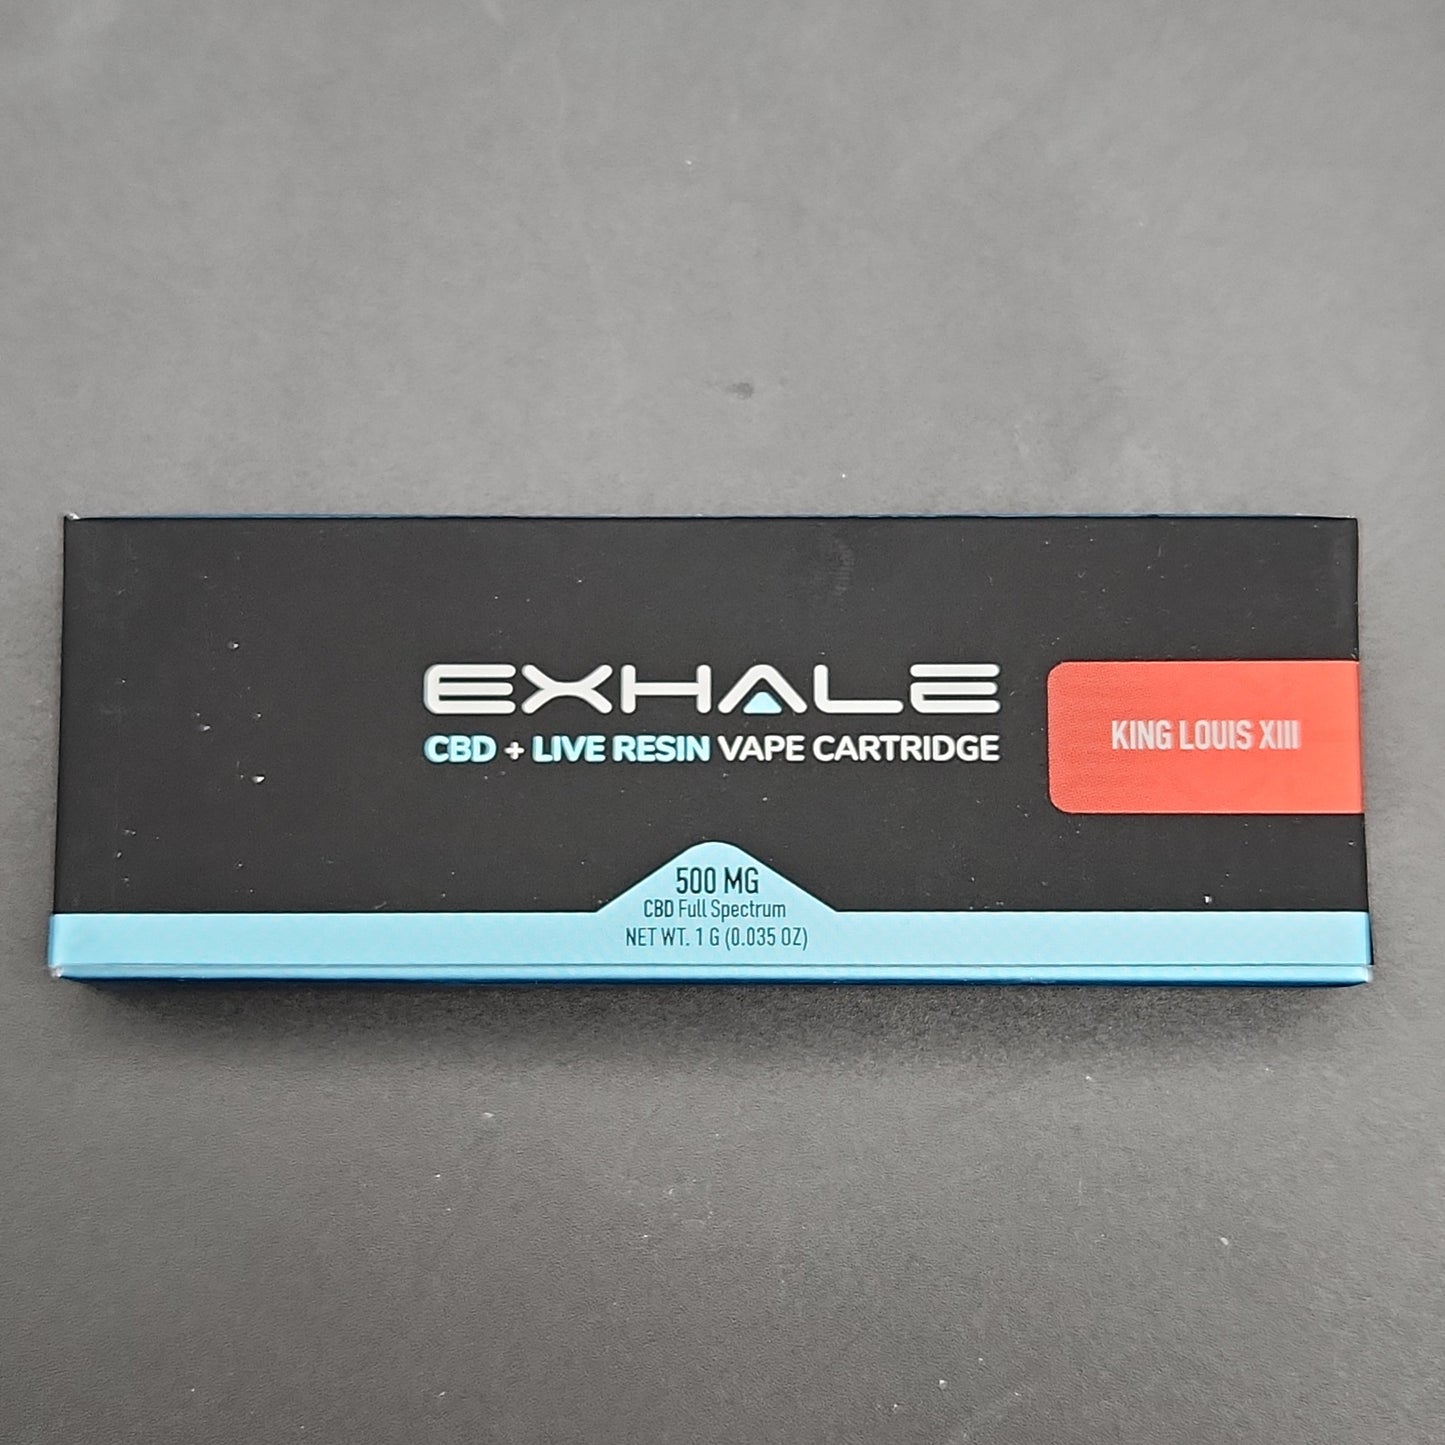 EXHALE CBD + Live Resin Vape Cartridges 1g King Louis XIII